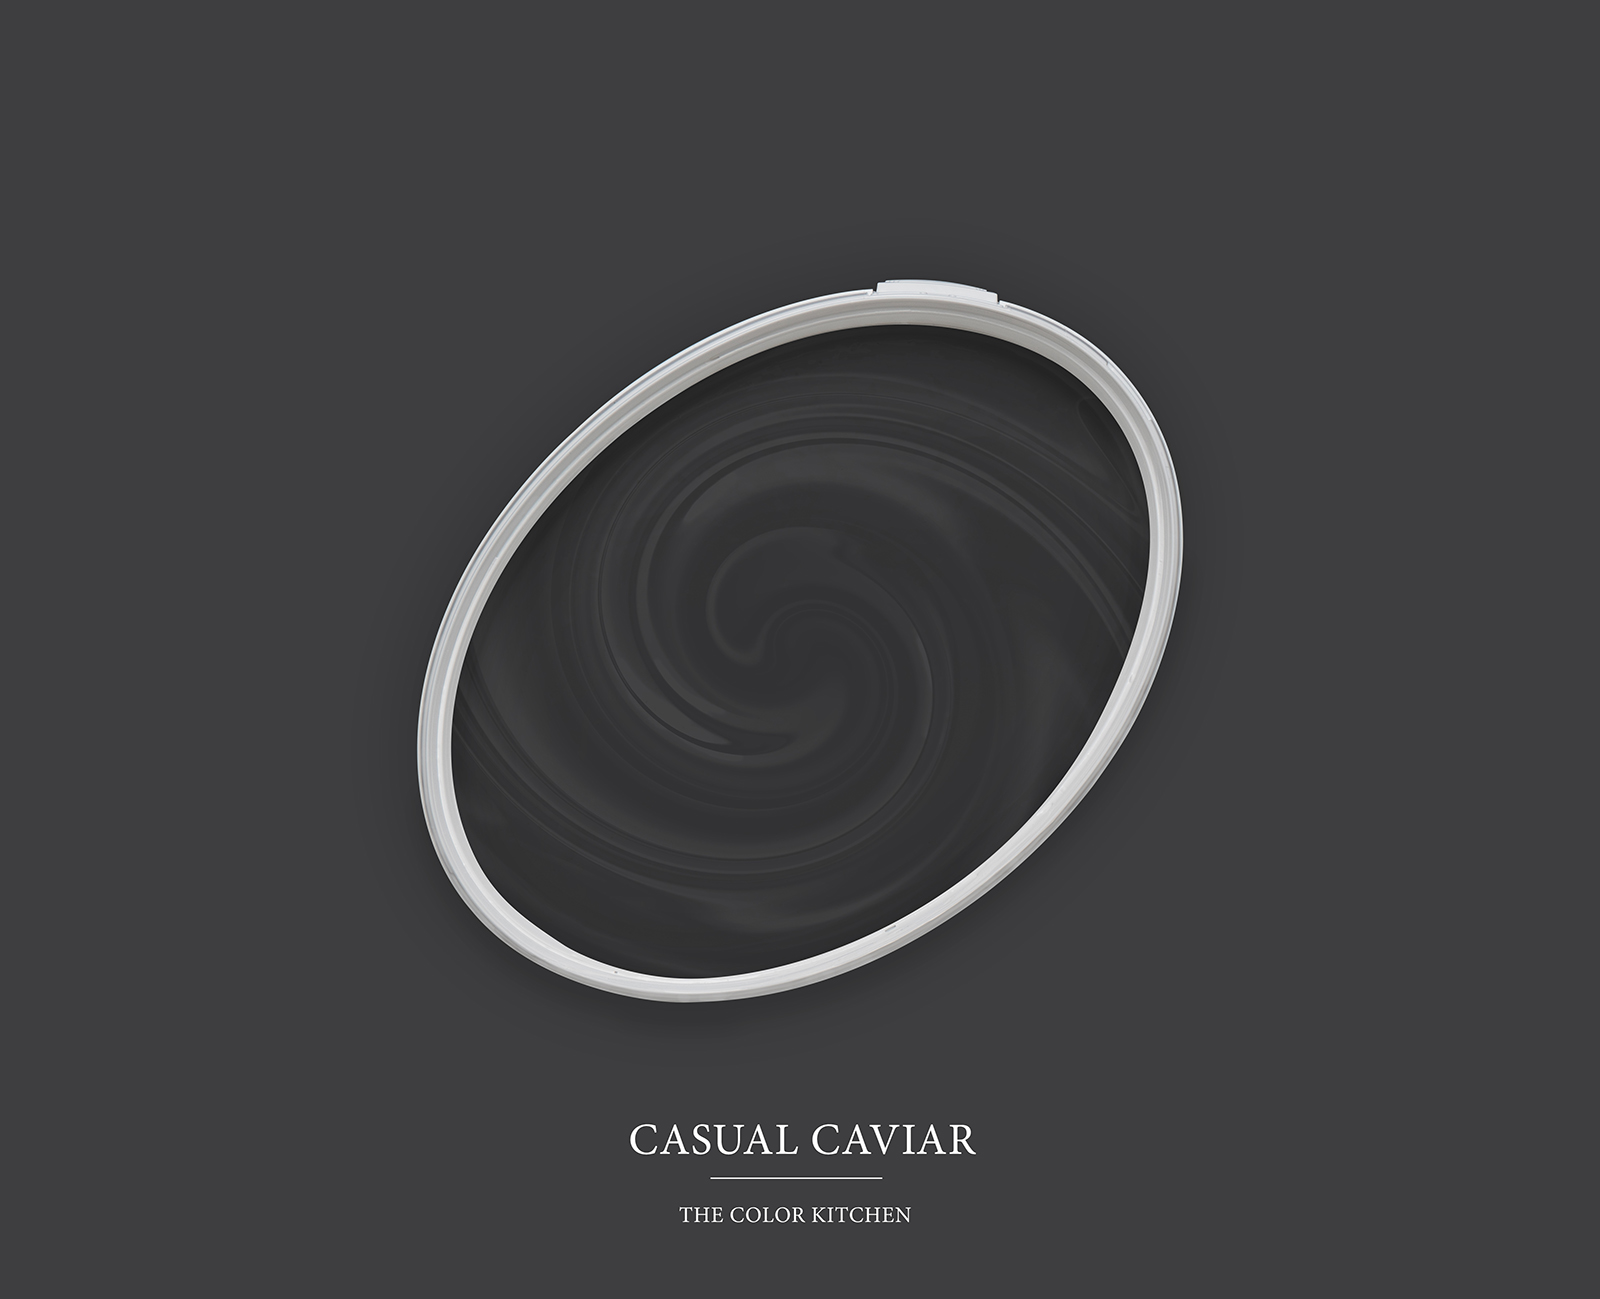         Wall Paint TCK1007 »Casual Caviar« in elegant black – 2.5 litre
    